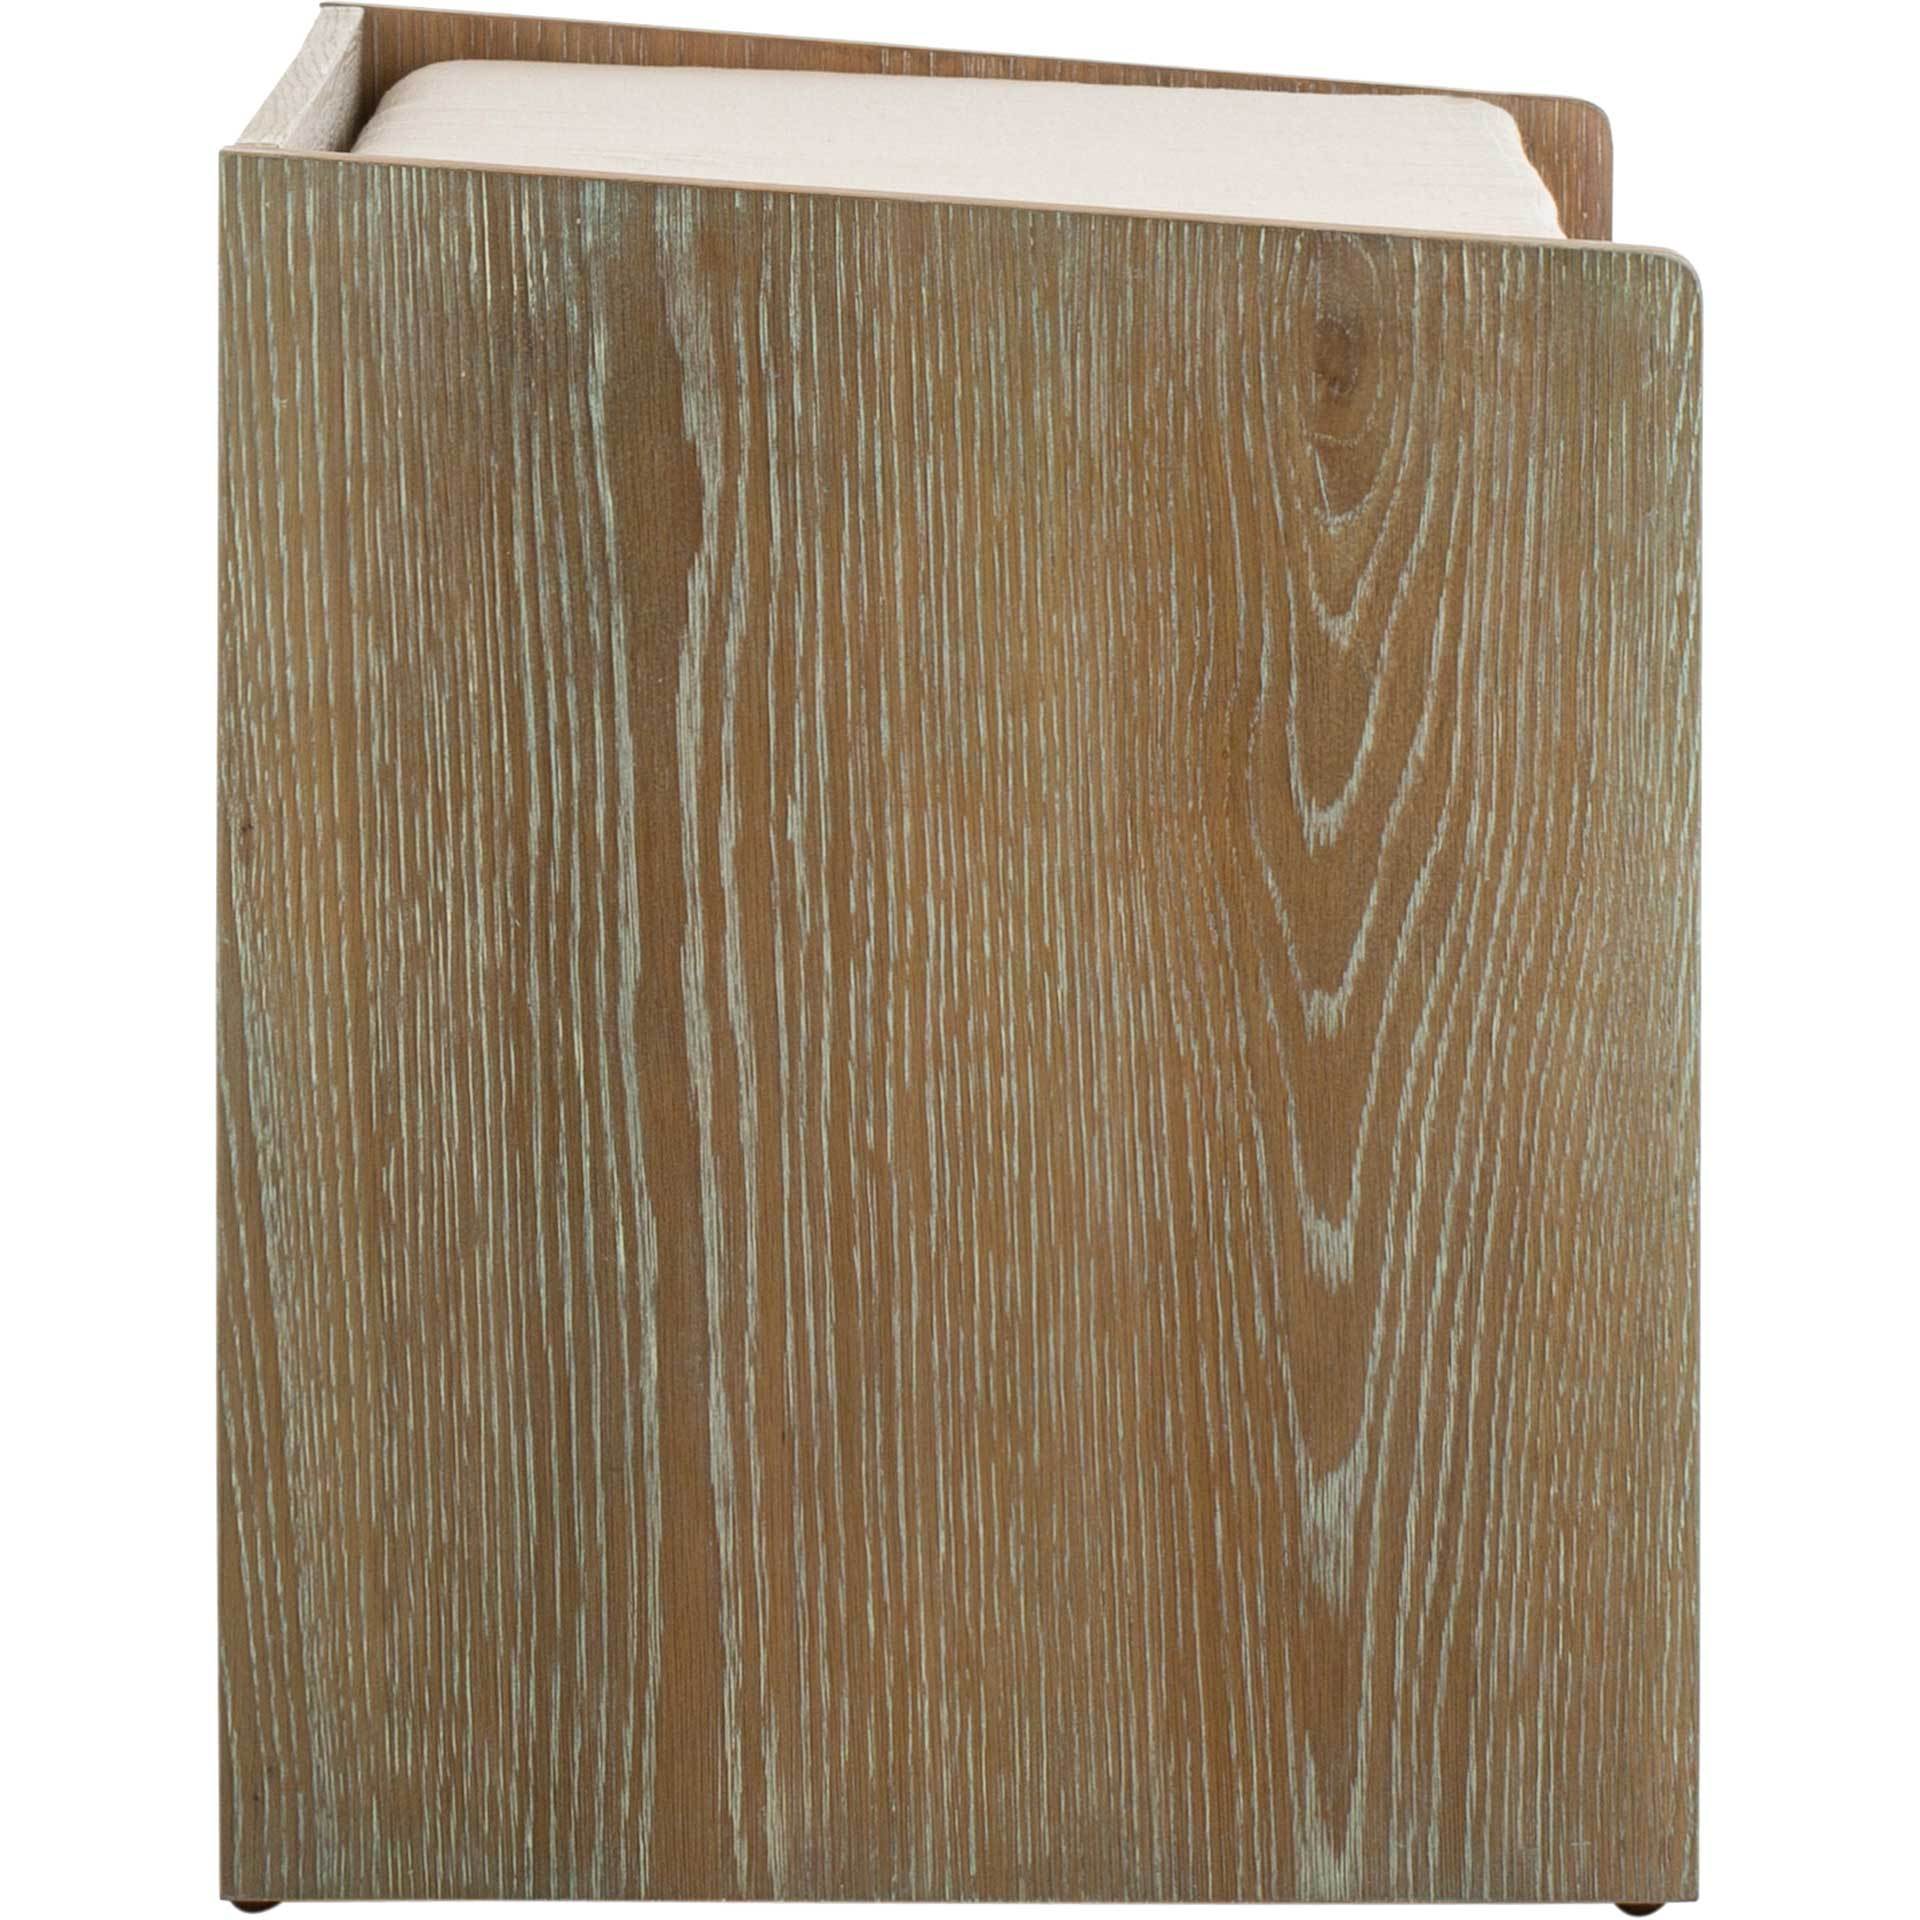 Perla Storage Bench Rustic Oak/Beige